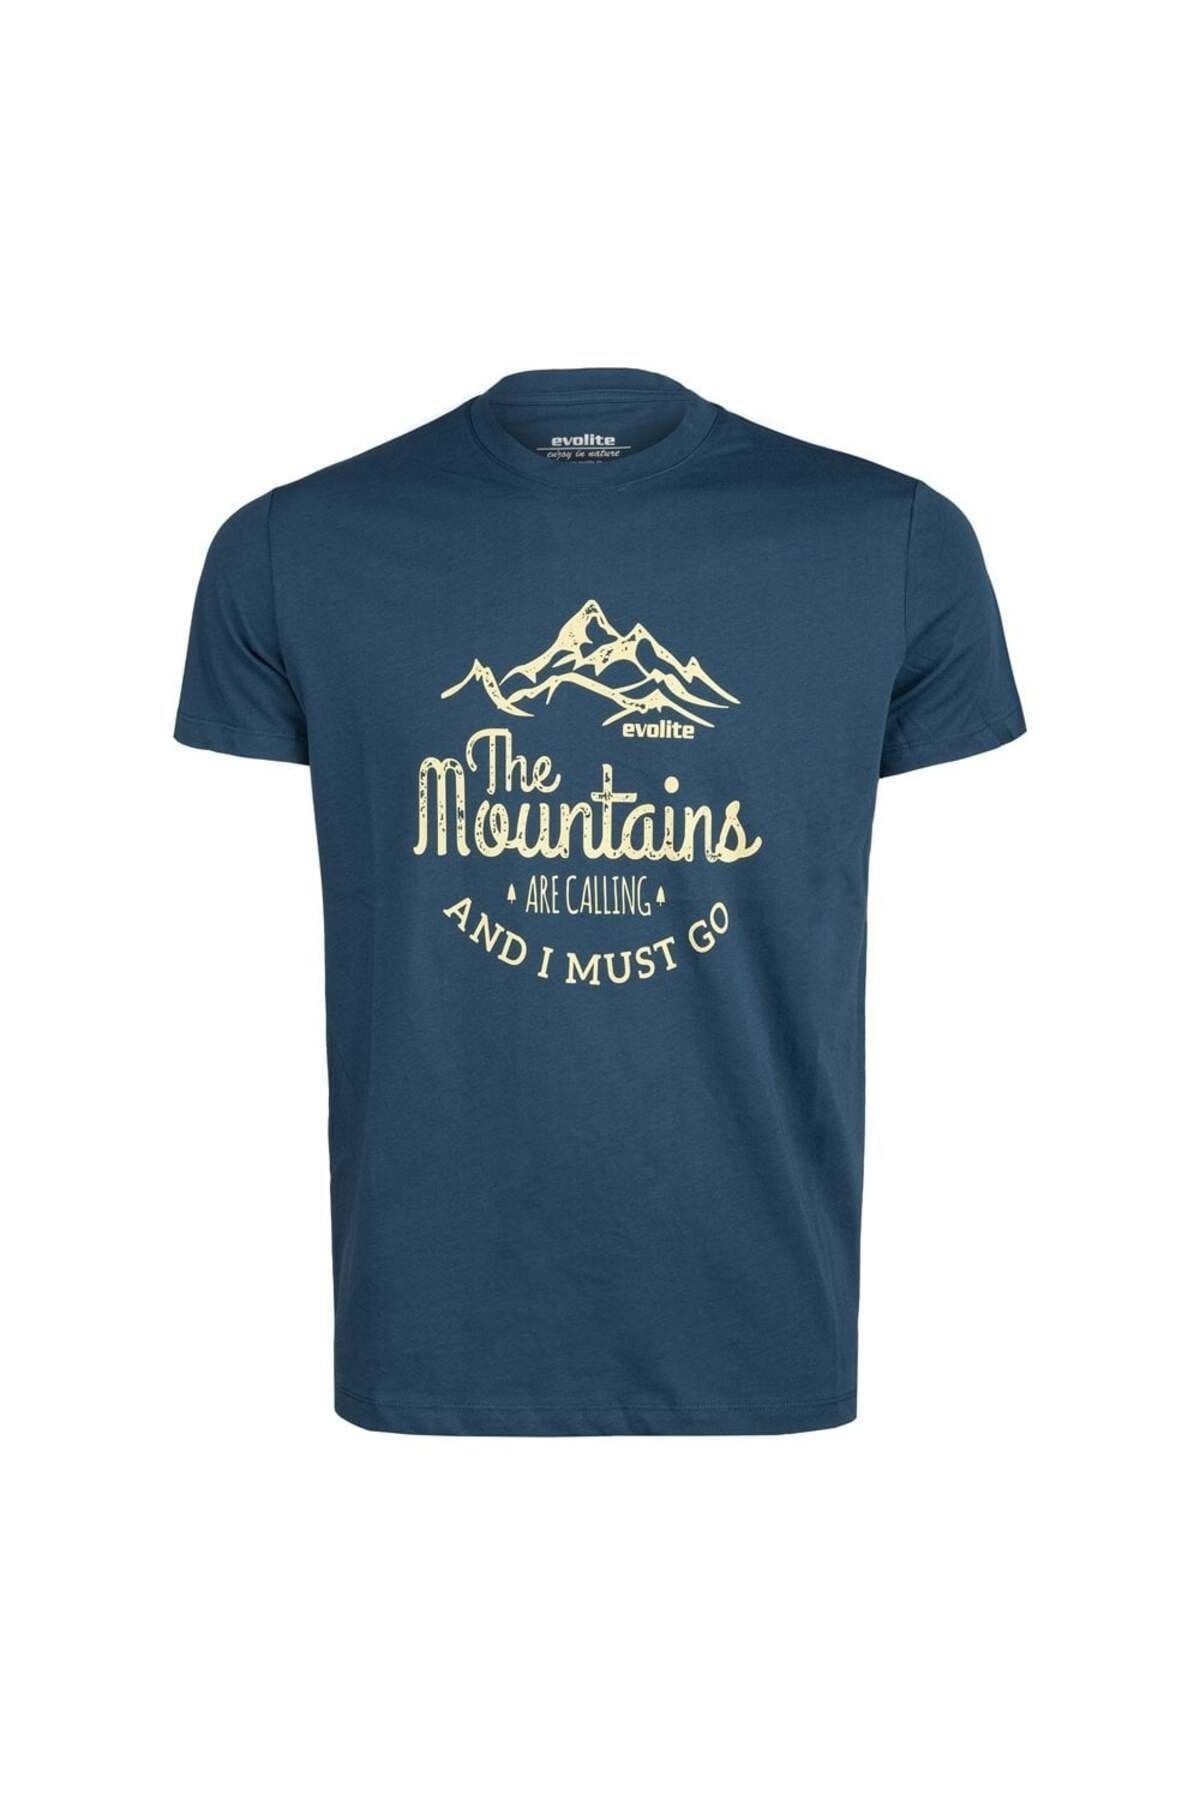 Evolite The Mountain T-Shirt [Turkuaz]